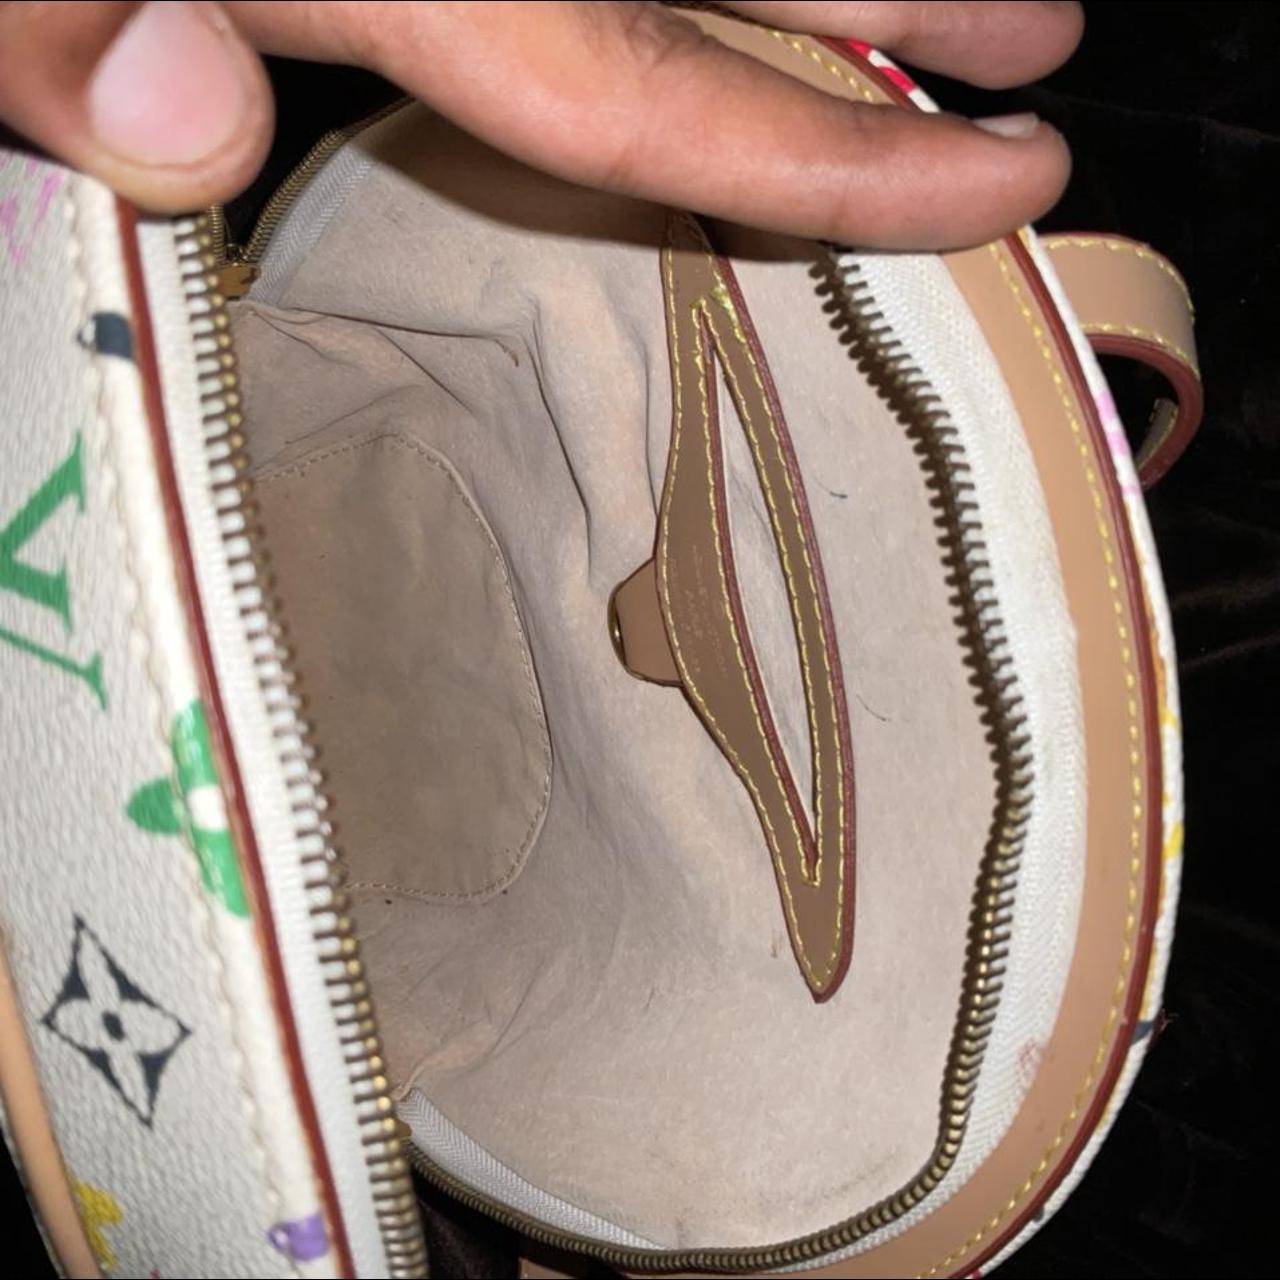 Authentication on bagaholic for Louis Vuitton bag. - Depop